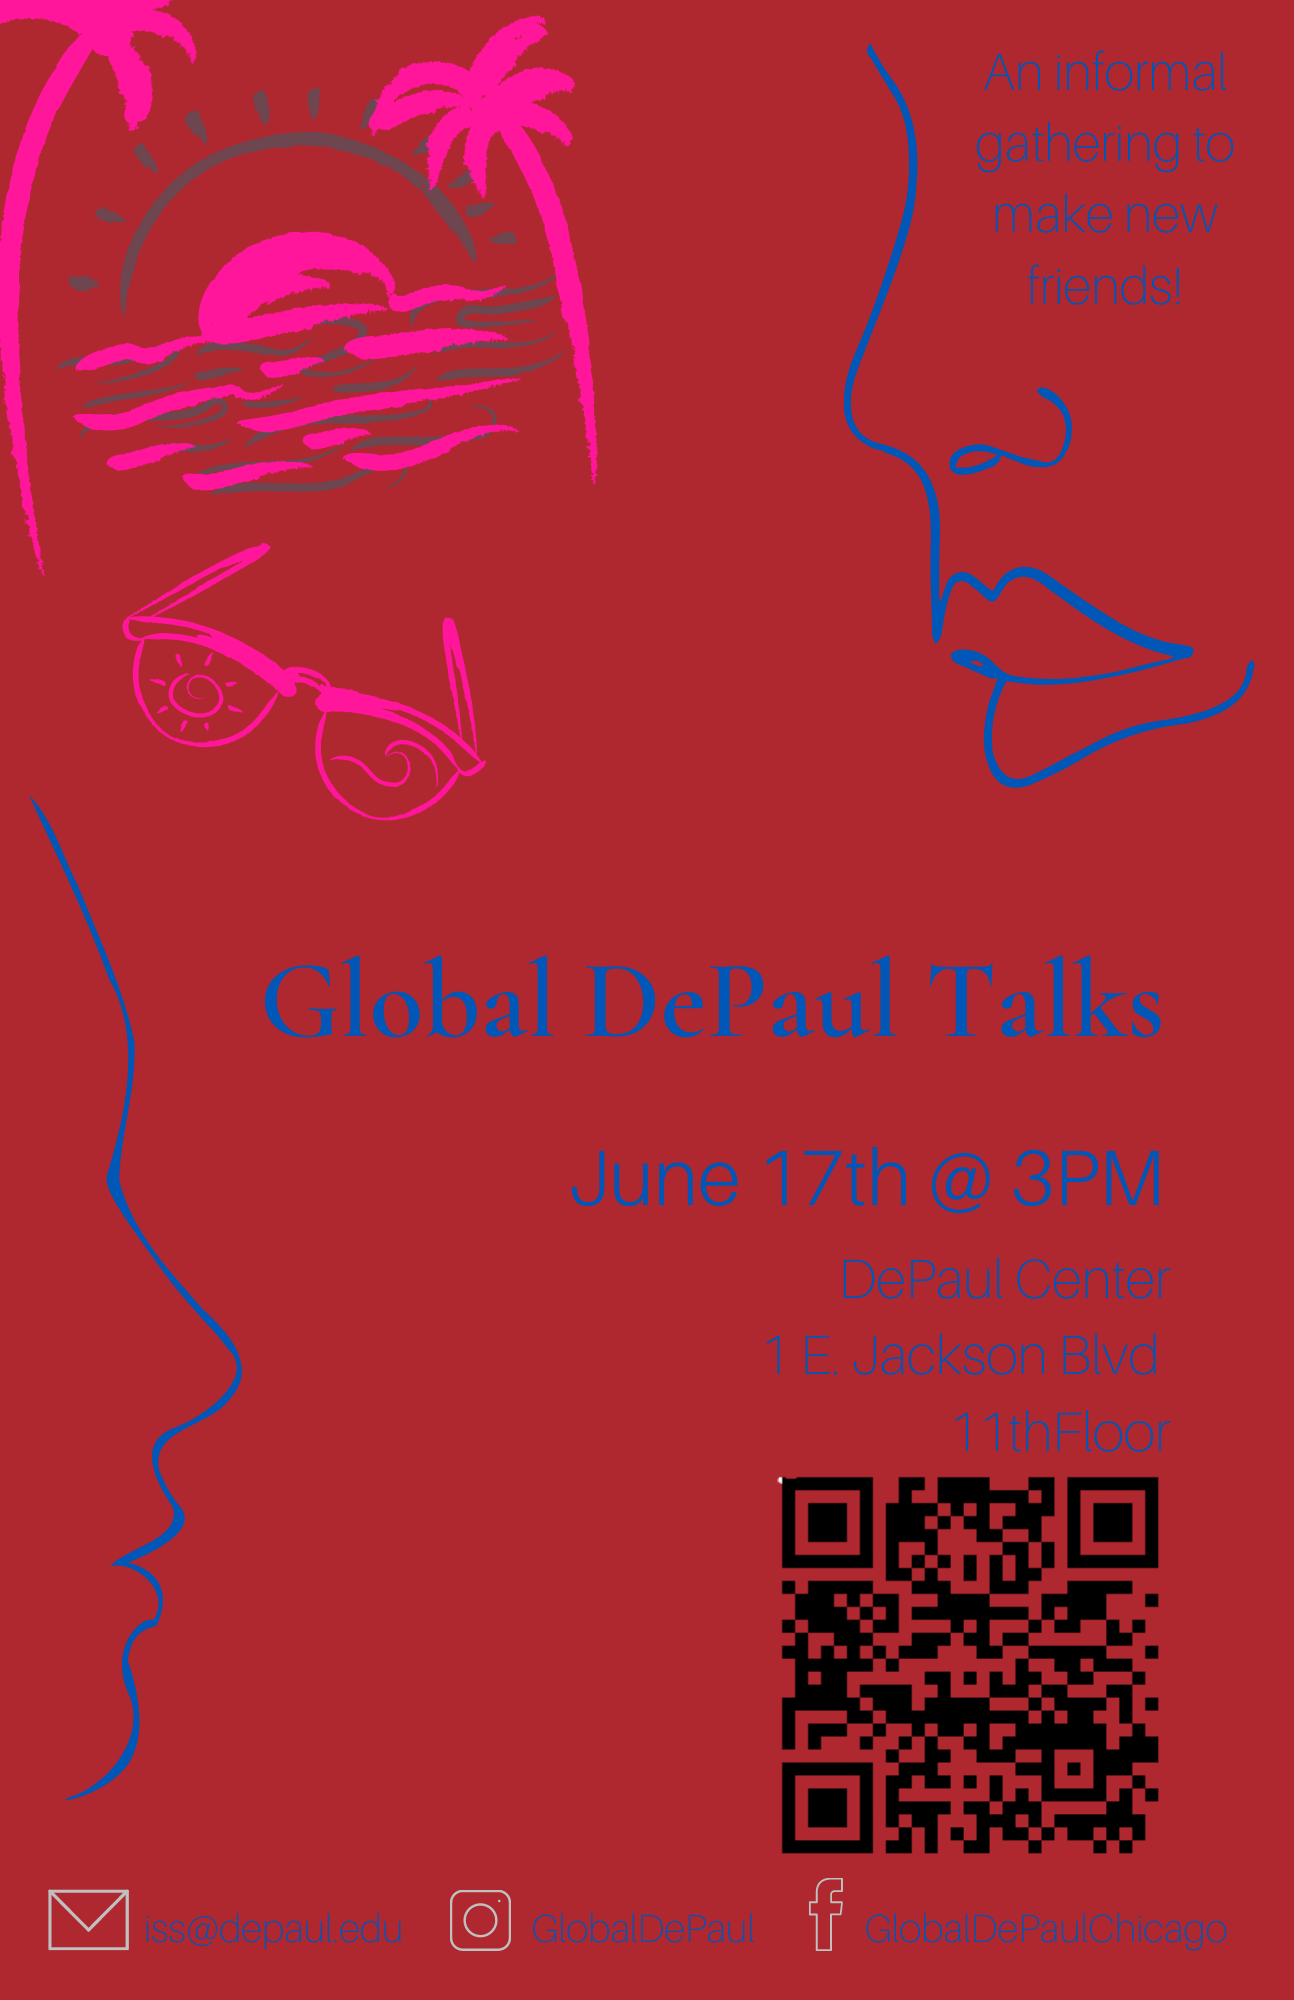 Global DePaul Talk Summer Flyer